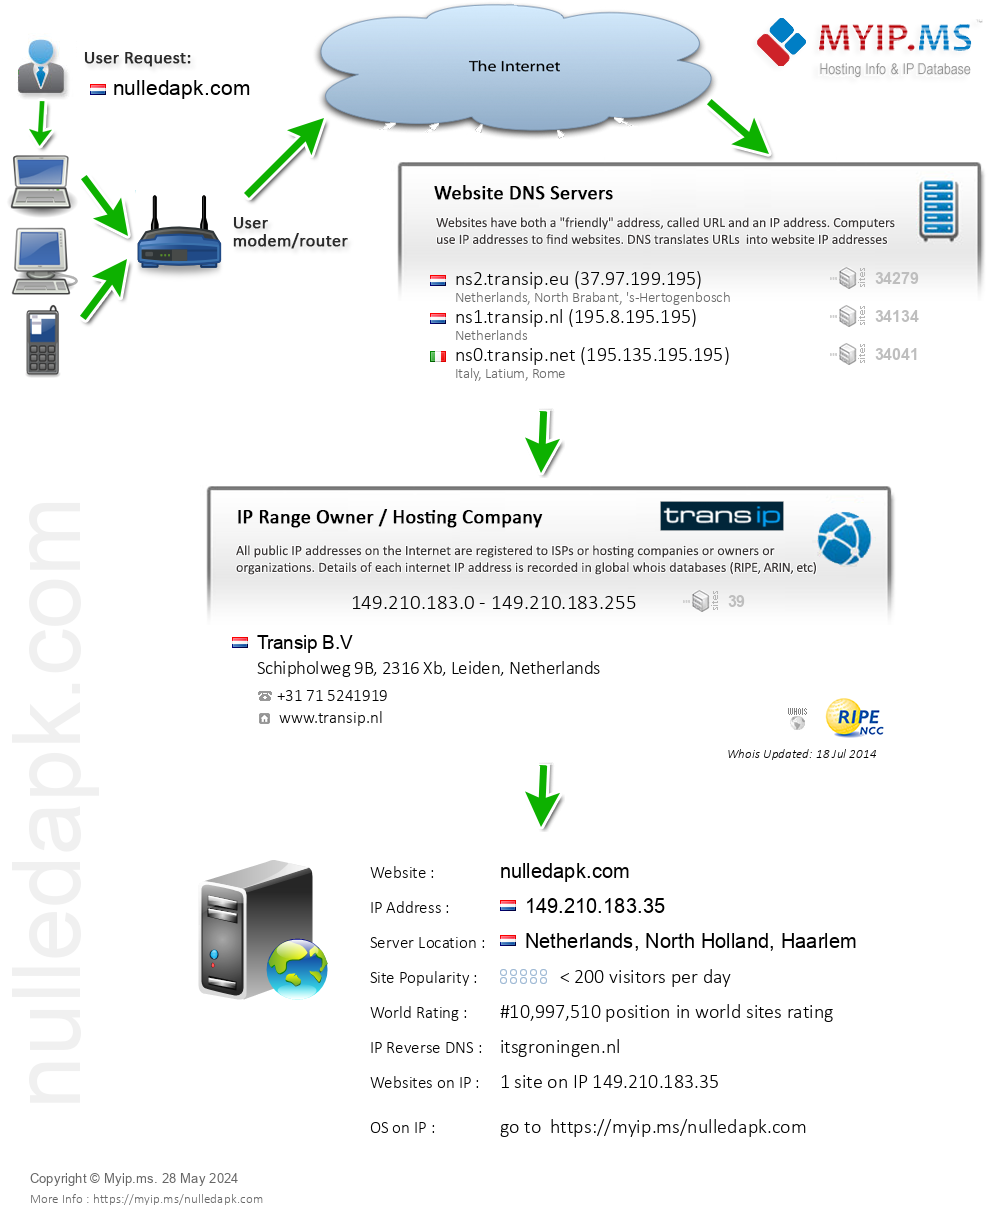 Nulledapk.com - Website Hosting Visual IP Diagram